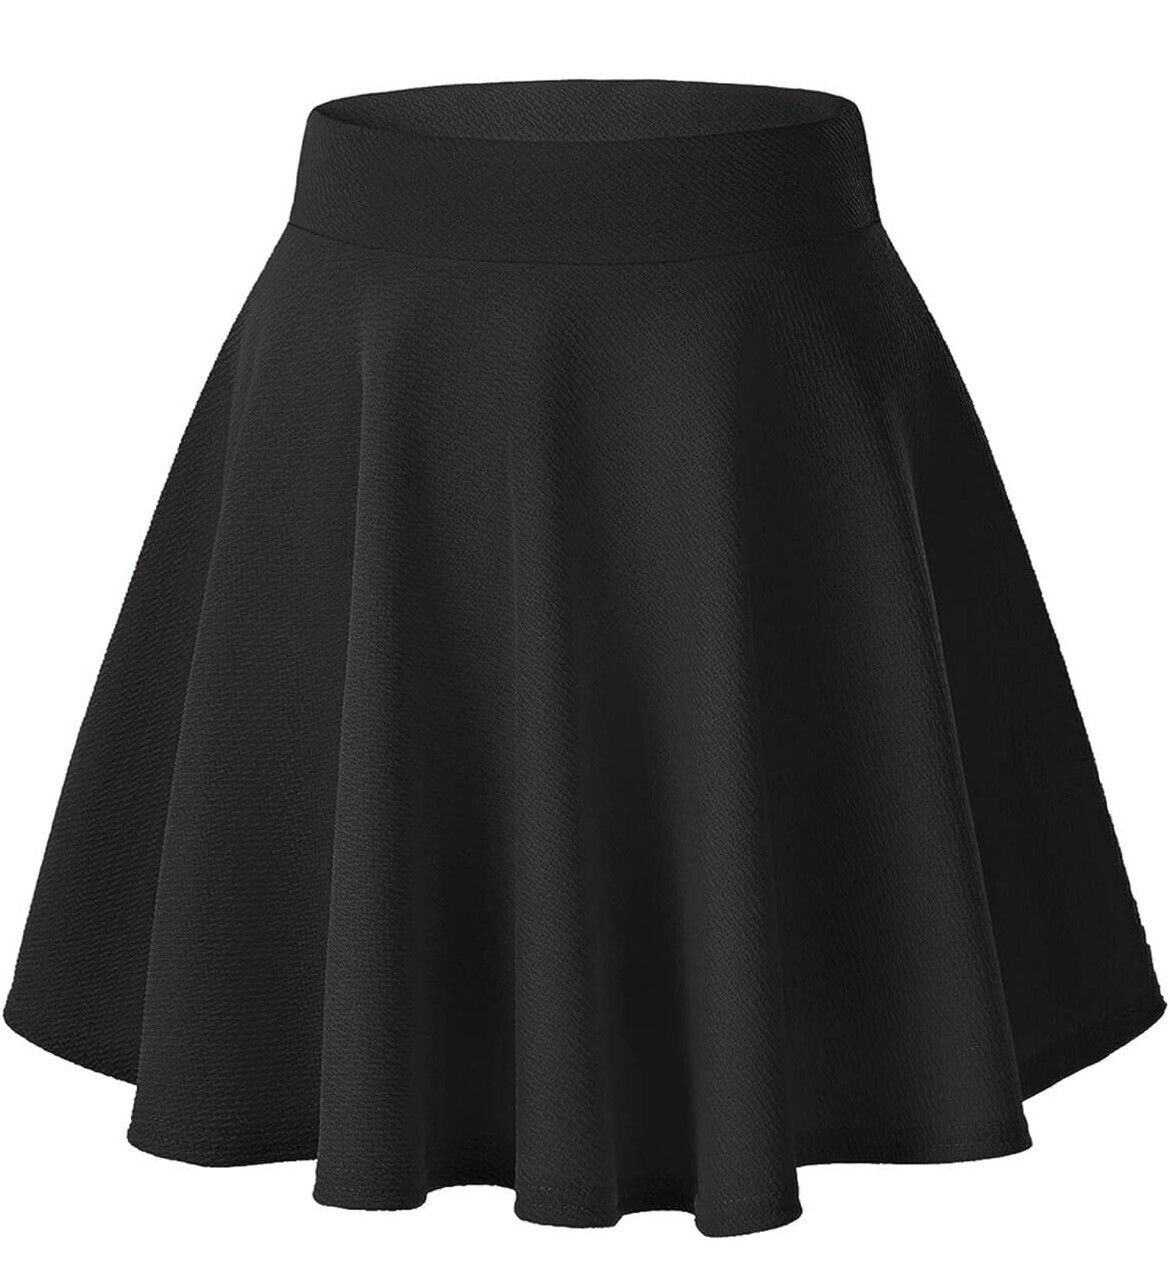 Adult Spandex Skirt